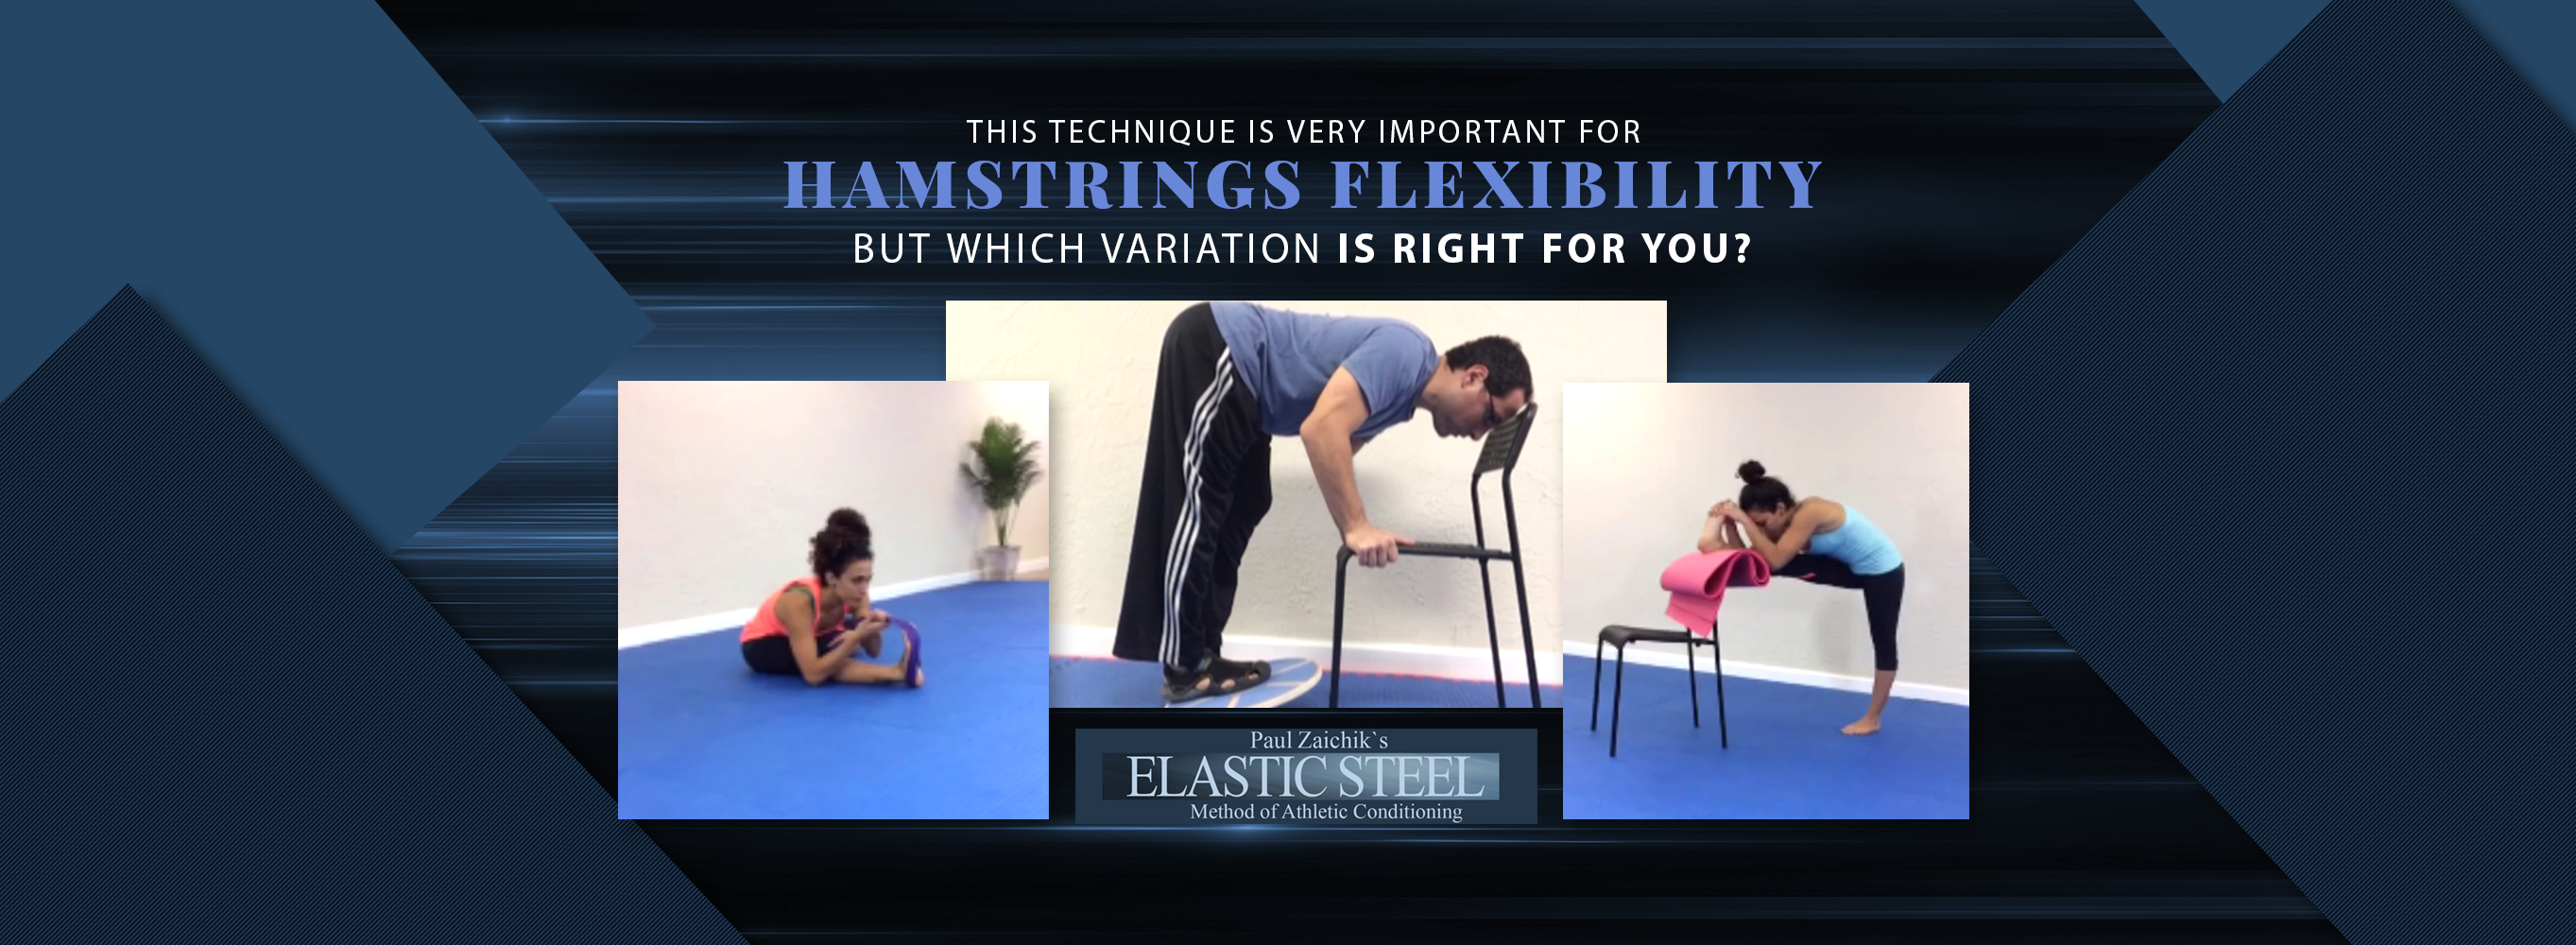 hamstrings flexibility elasticsteel